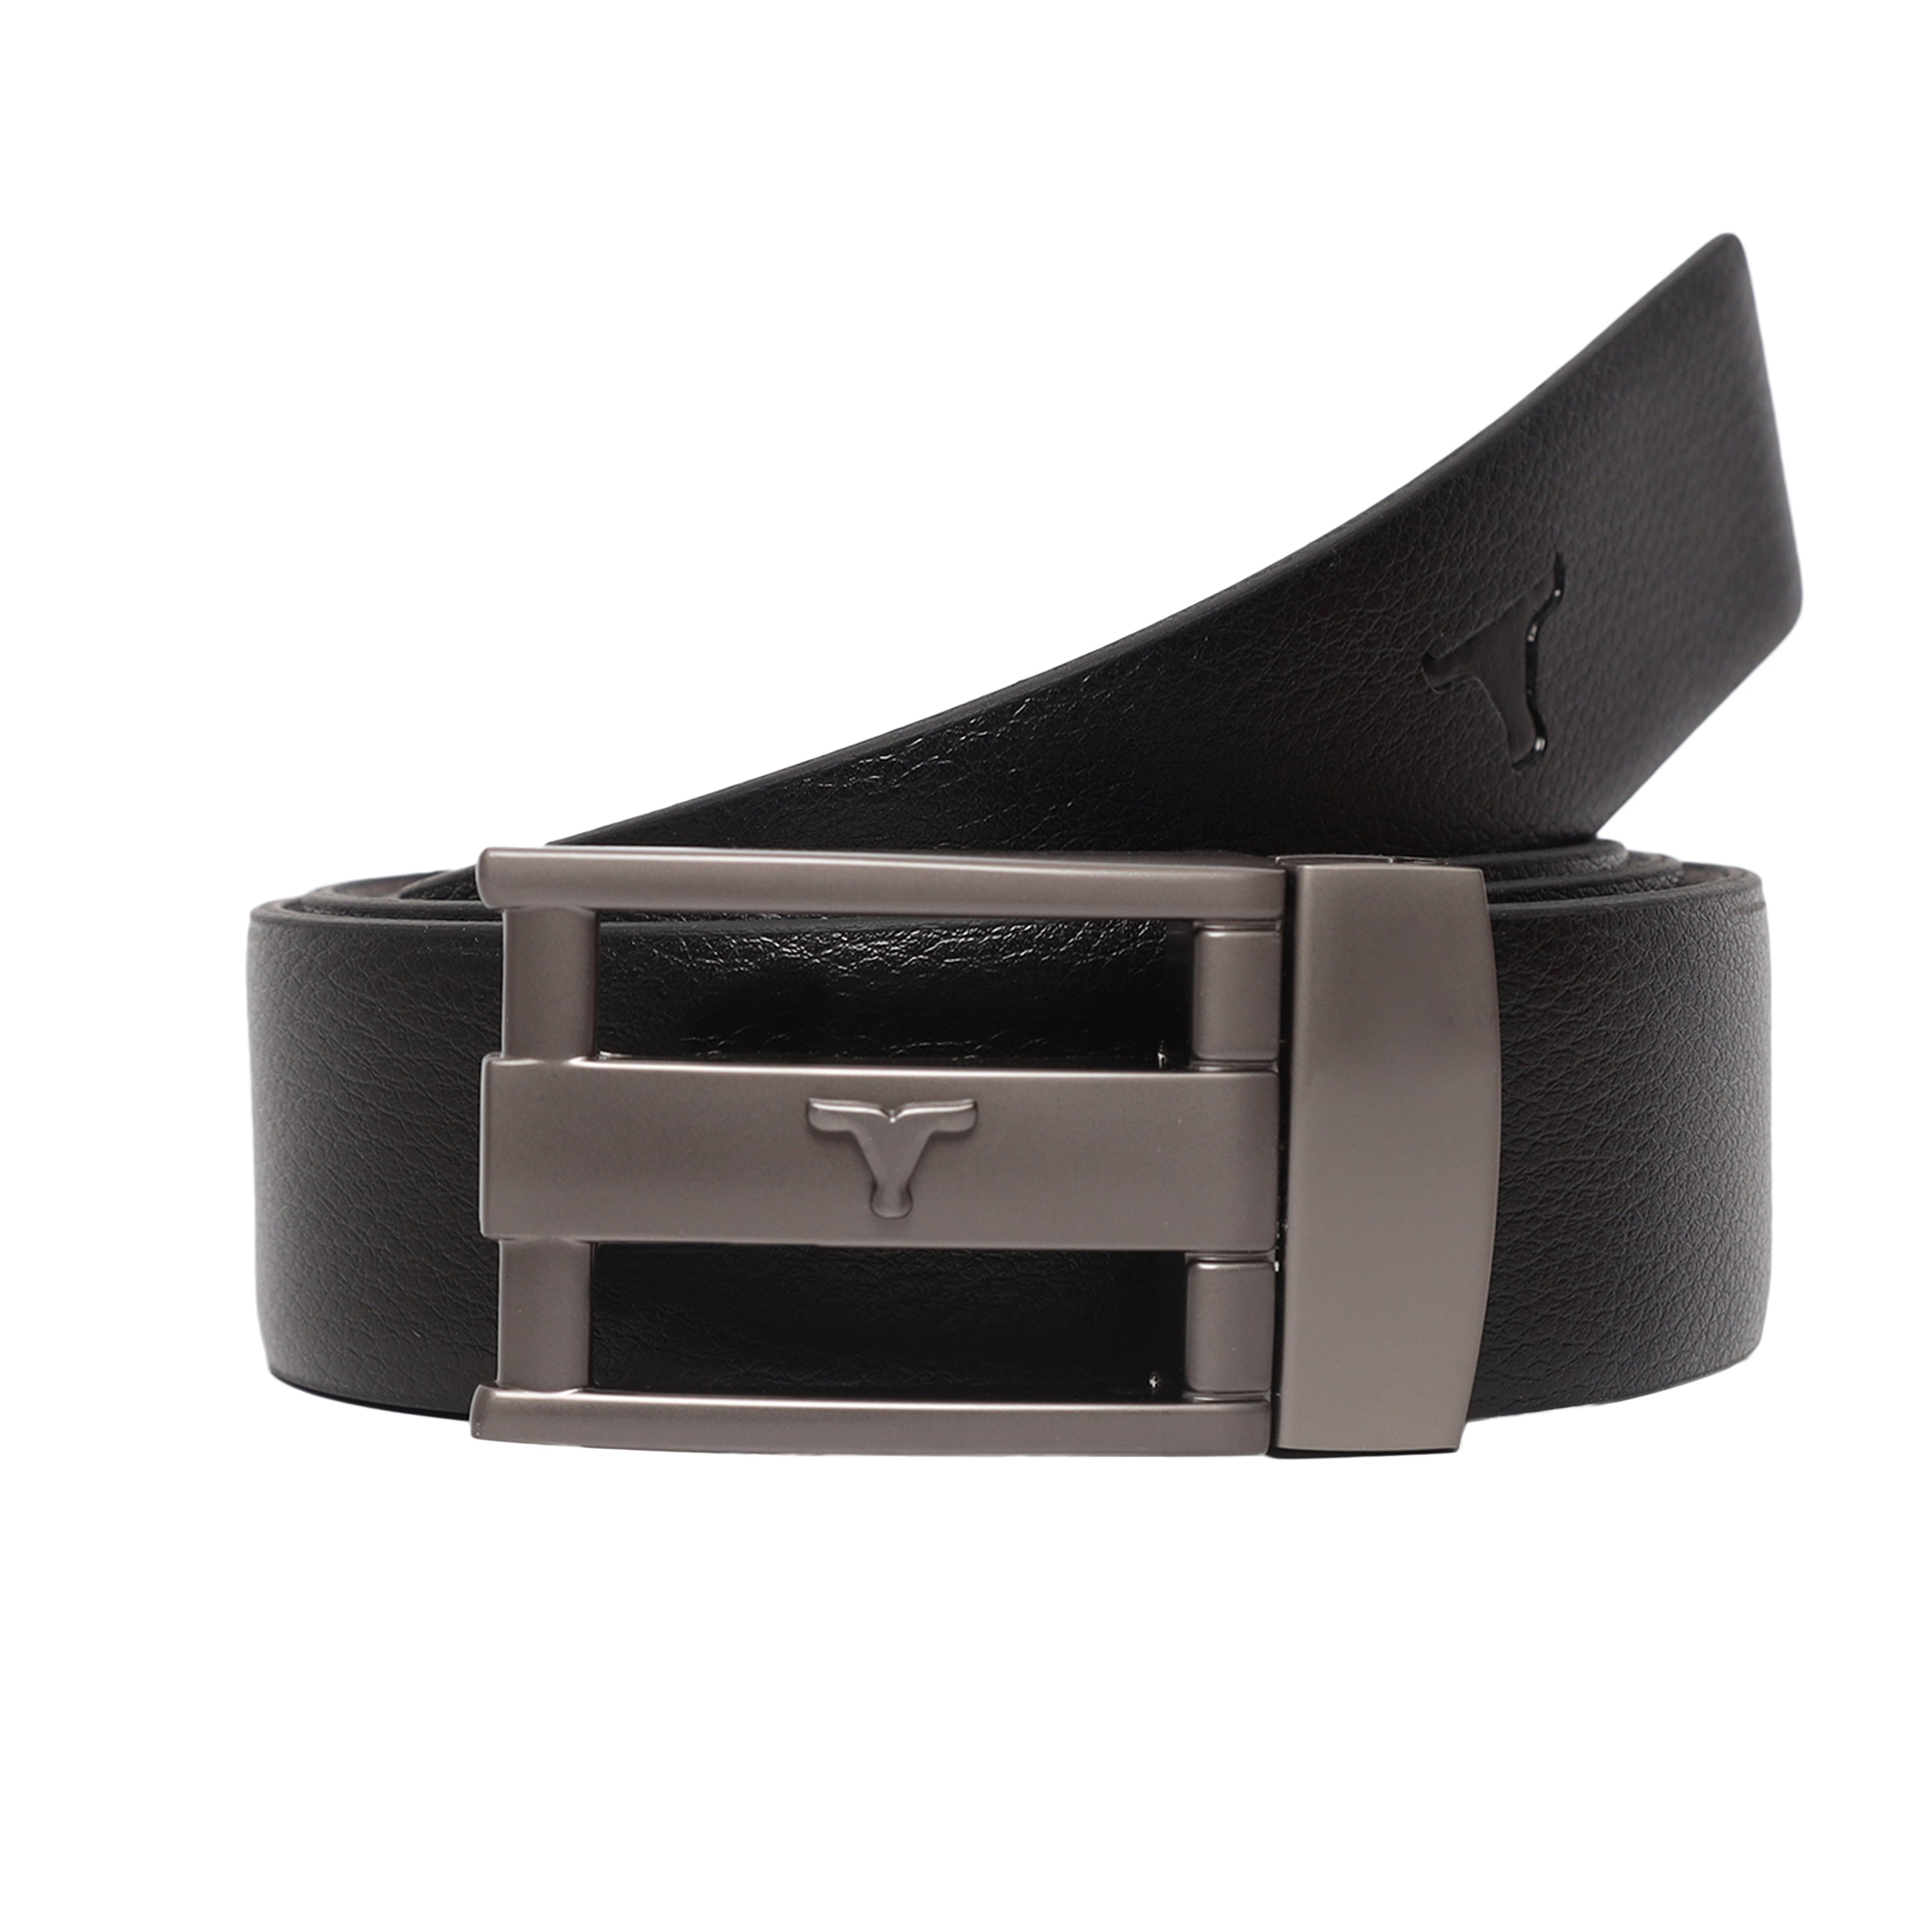 Bulchee Men's Genuine Leather Reversible Flat Buckle Belt (Formal, Black/Brown) BUL2217B